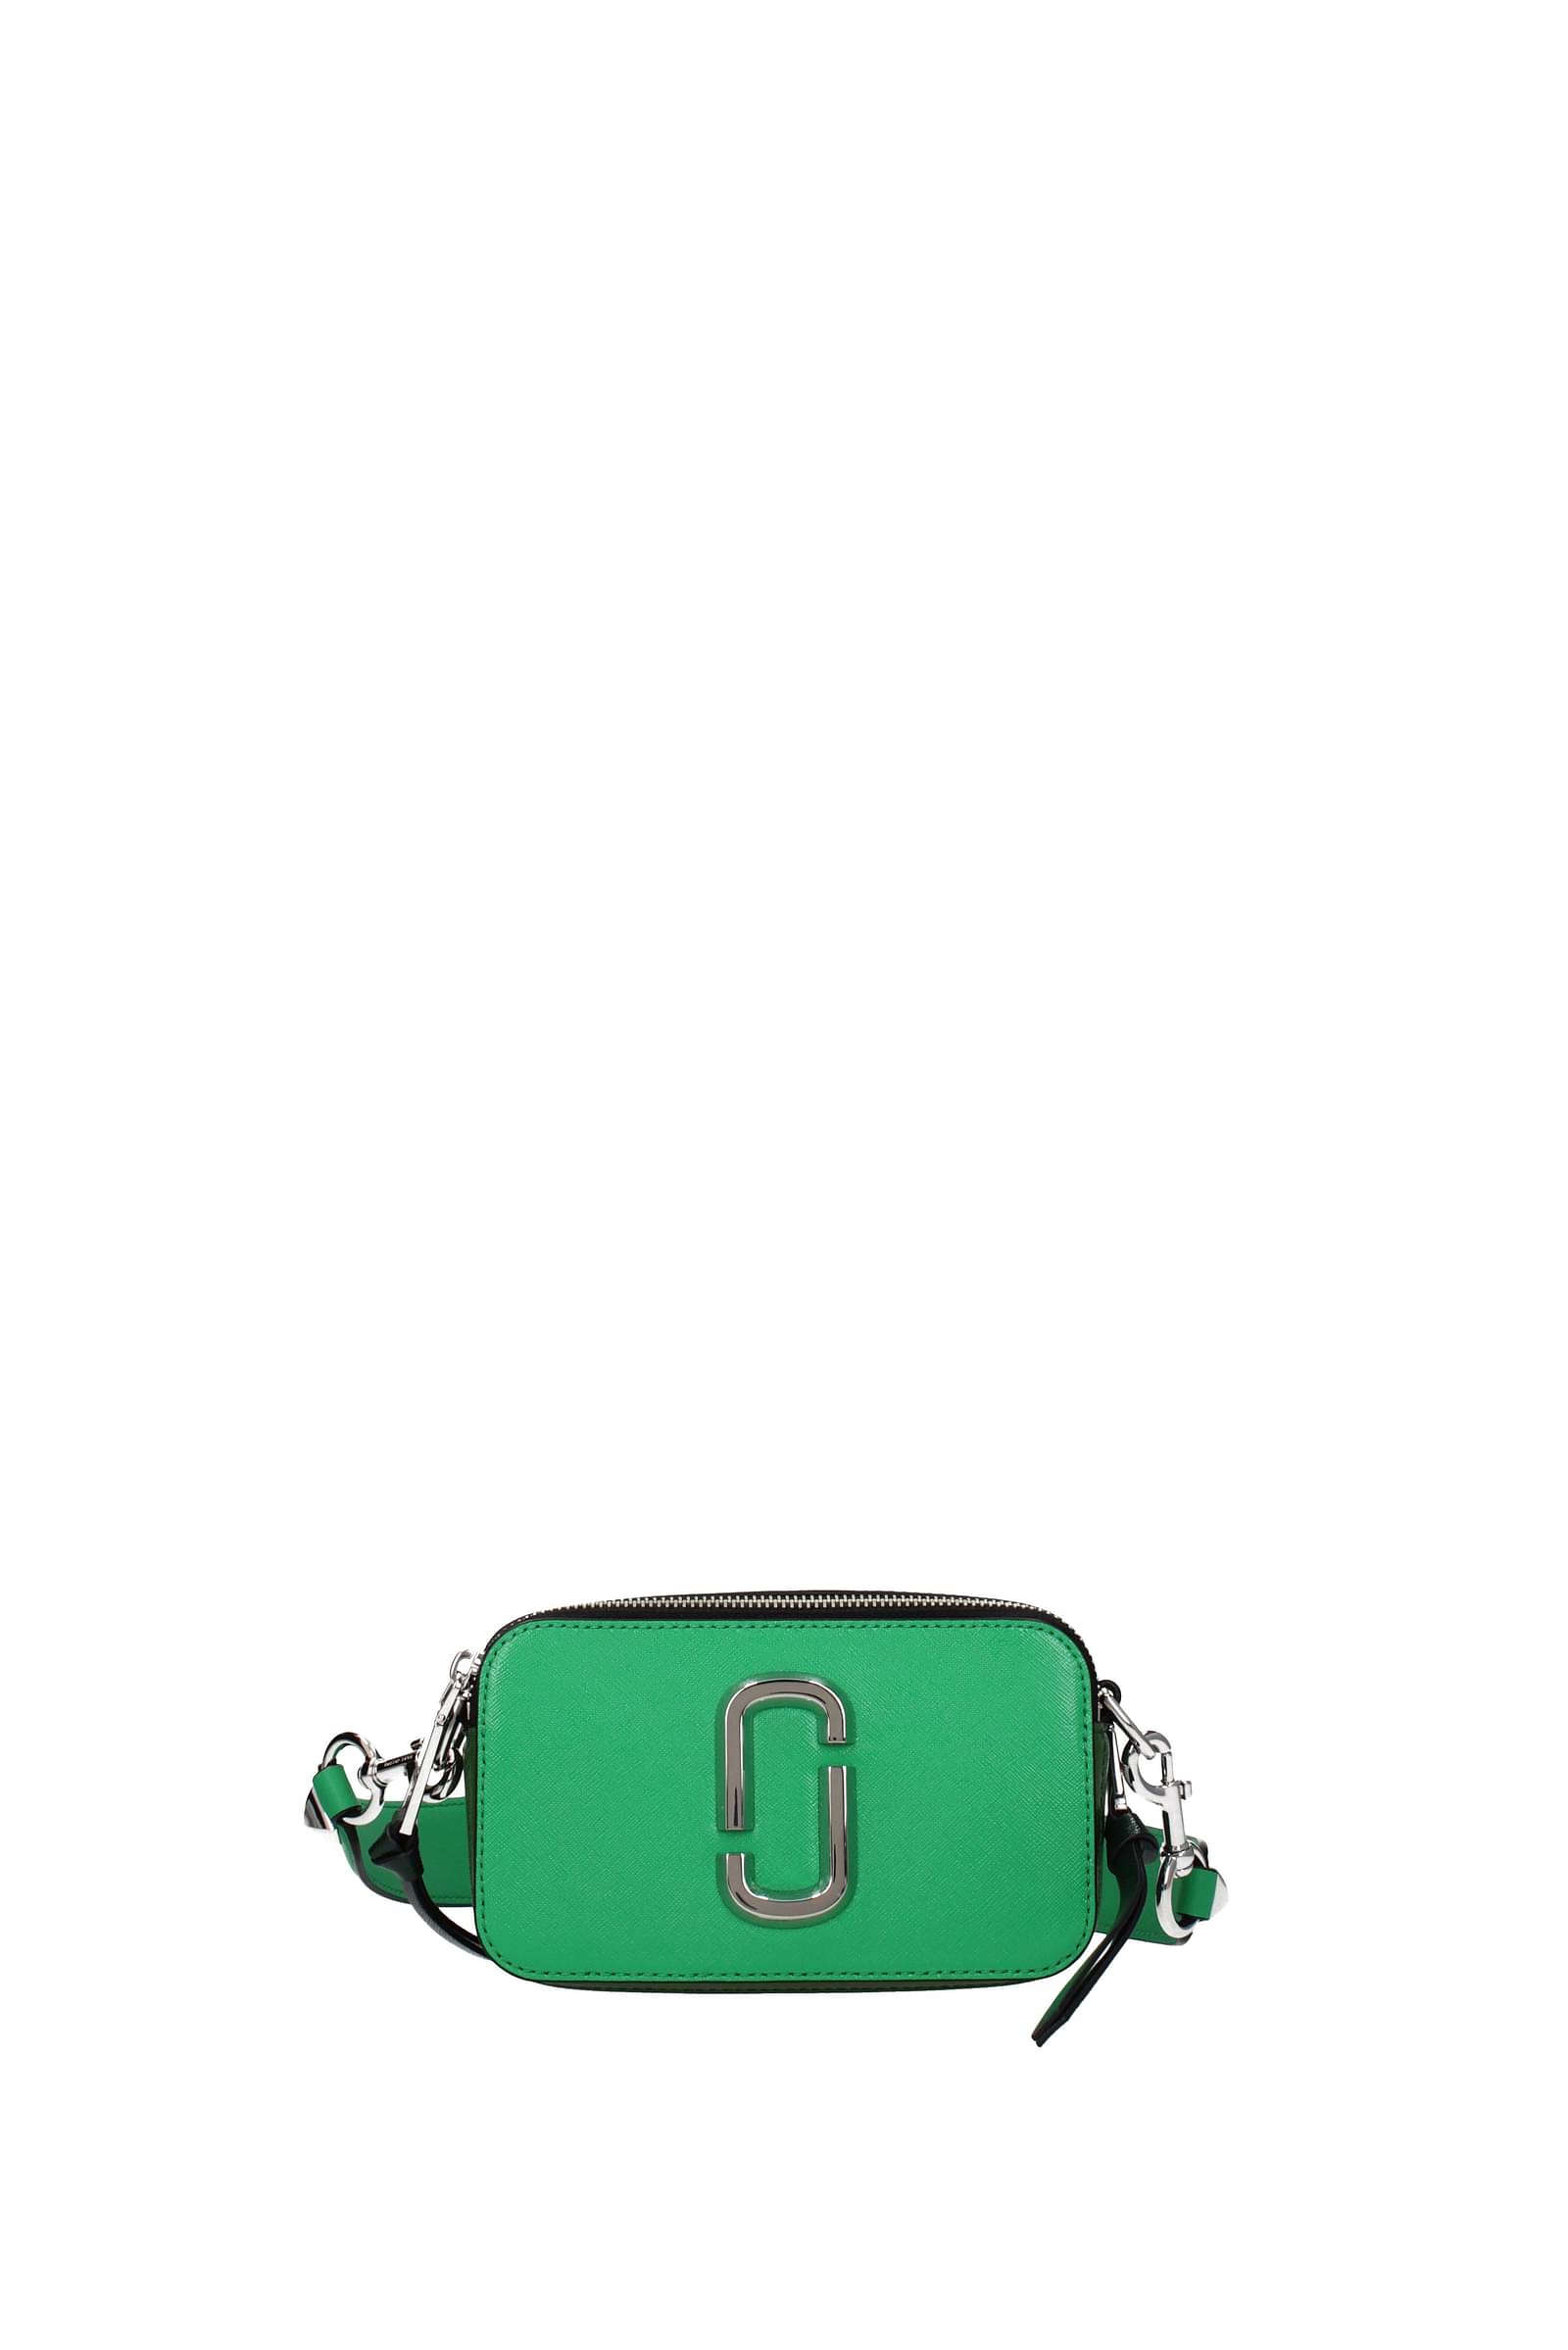 Women Marc Jacobs Leather Olive Army Green Backpack School Bag Handbag Purse  | eBay